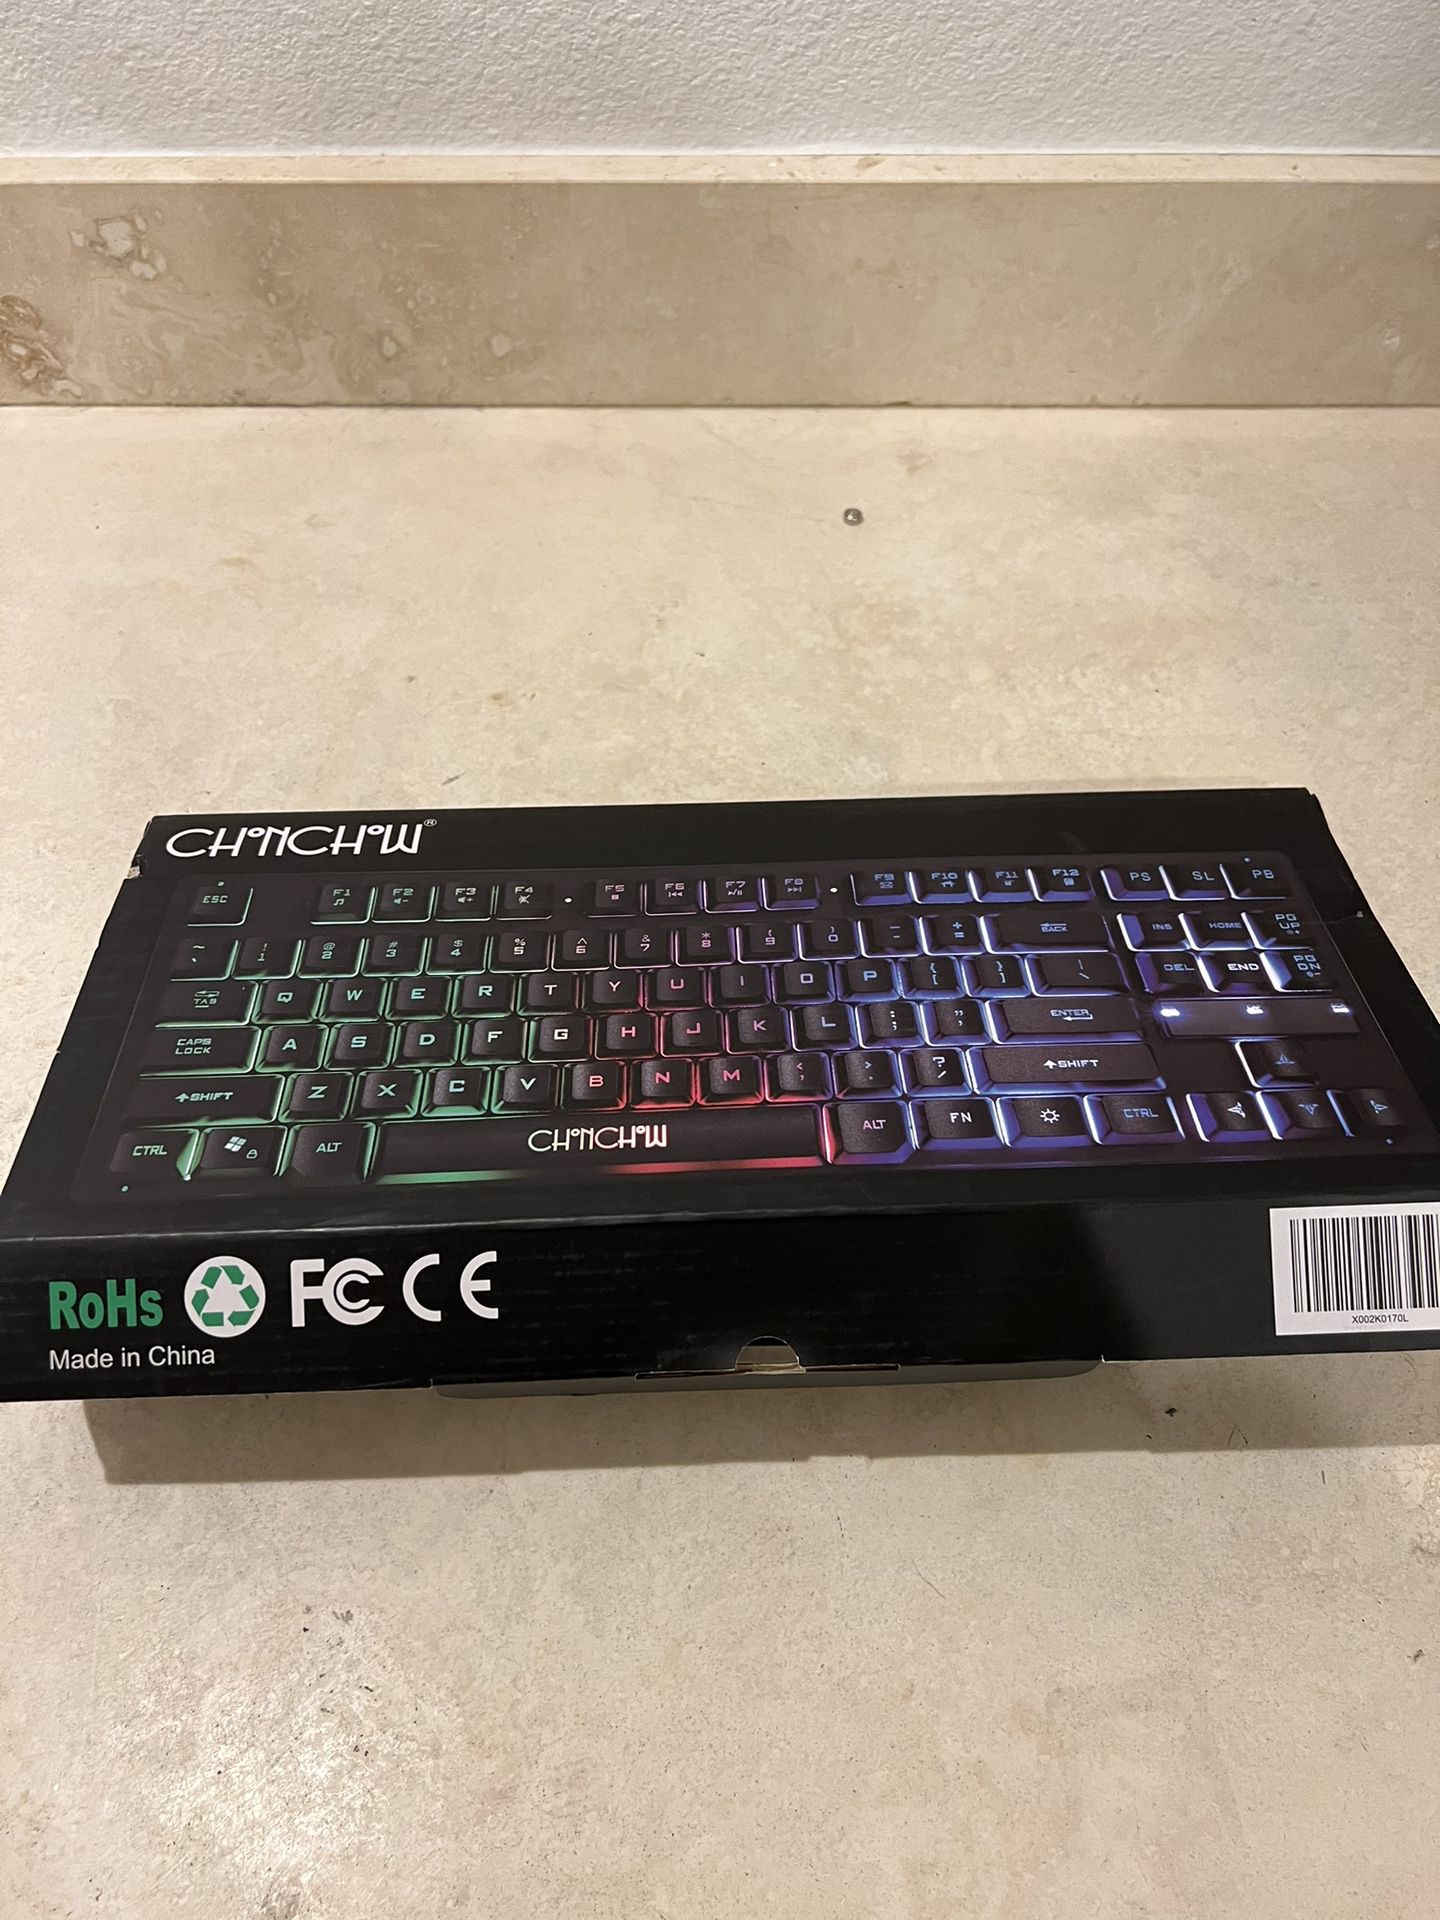 ChonChow Gaming Light Up Keyboard 